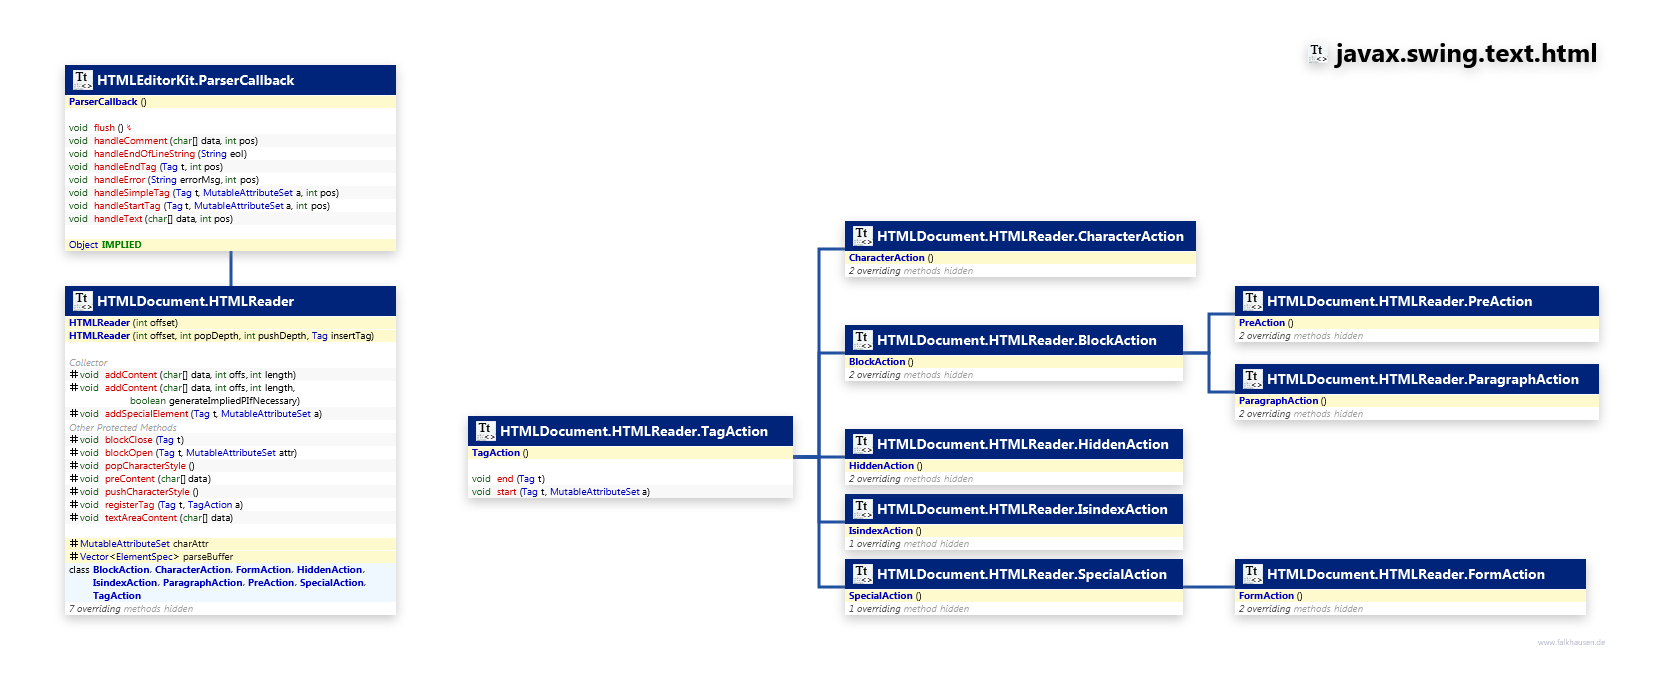 javax.swing.text.html HTMLReader class diagram and api documentation for Java 7